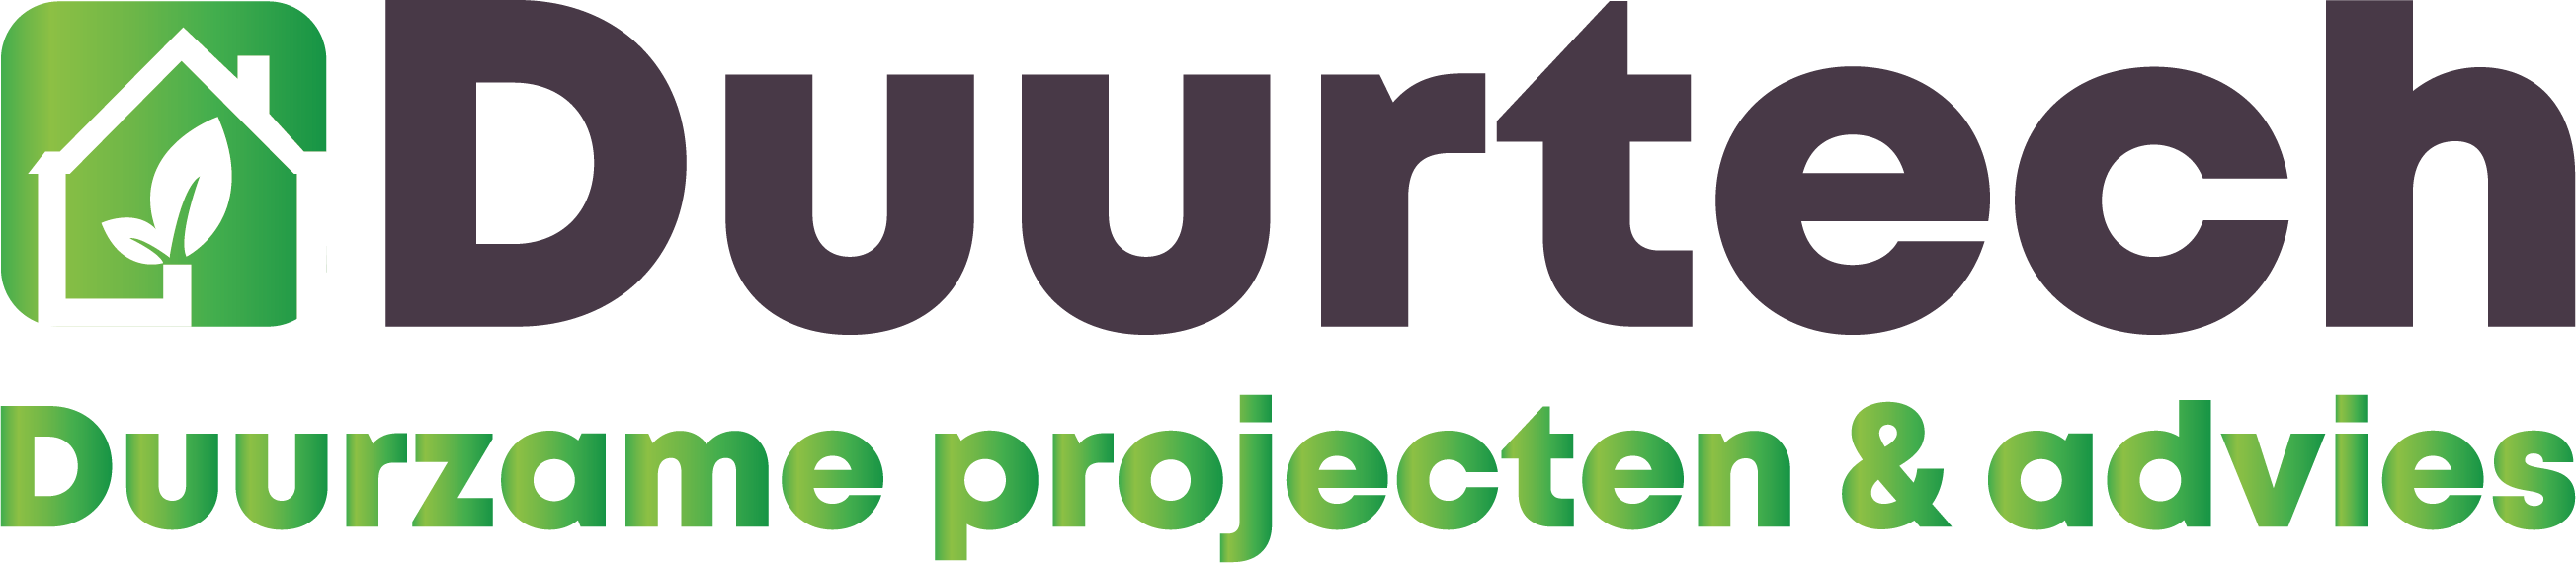 duurtech logo